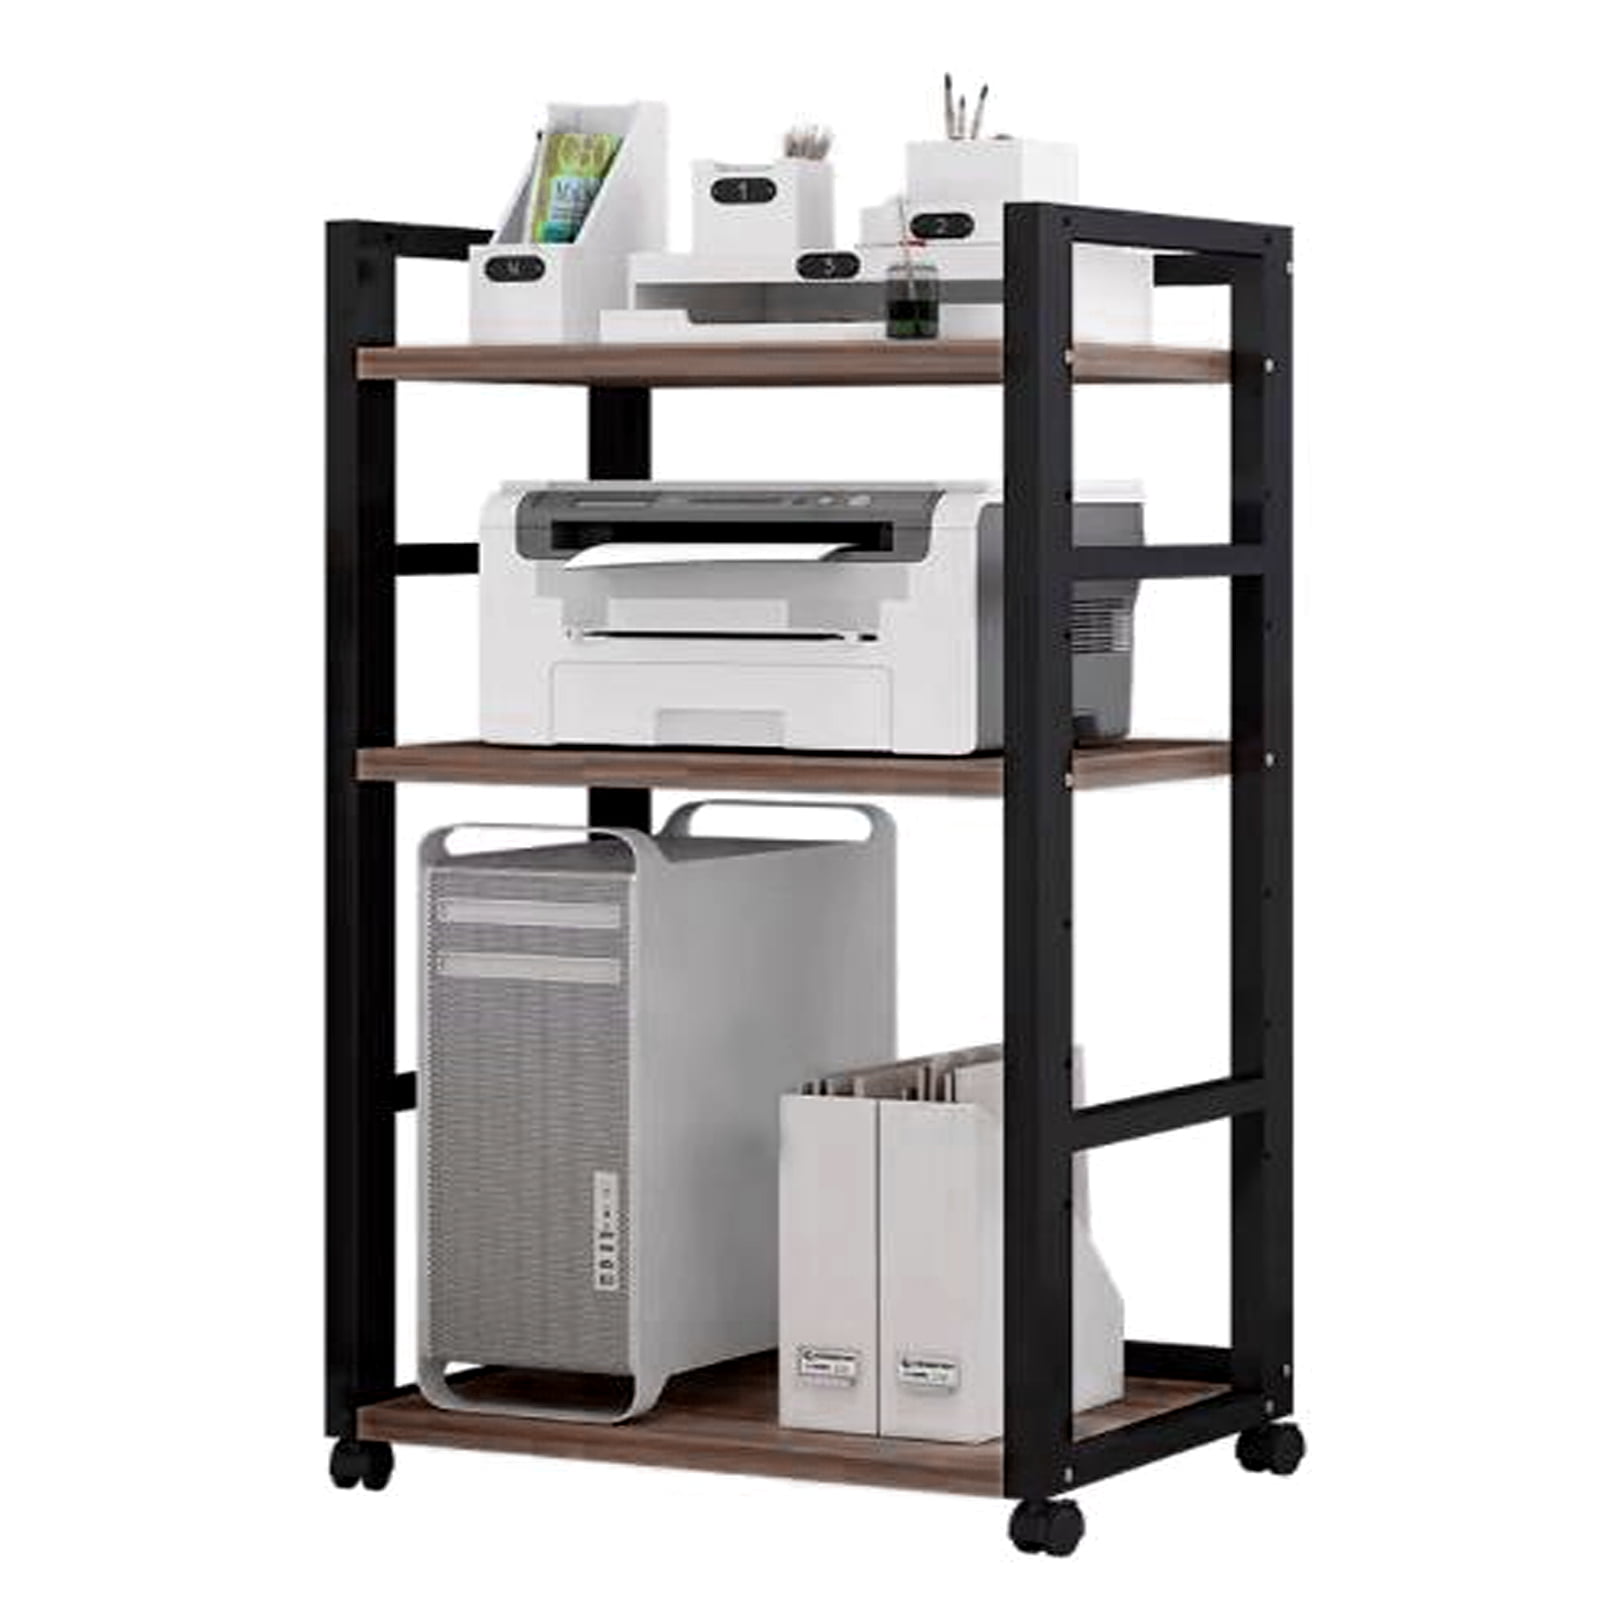 daily supplies Wooden Desktop Printer Stand,Home Office Printer Rack Double-Layer Copier Scanner Finishing Rack， for Folder Storage/Bookshelves